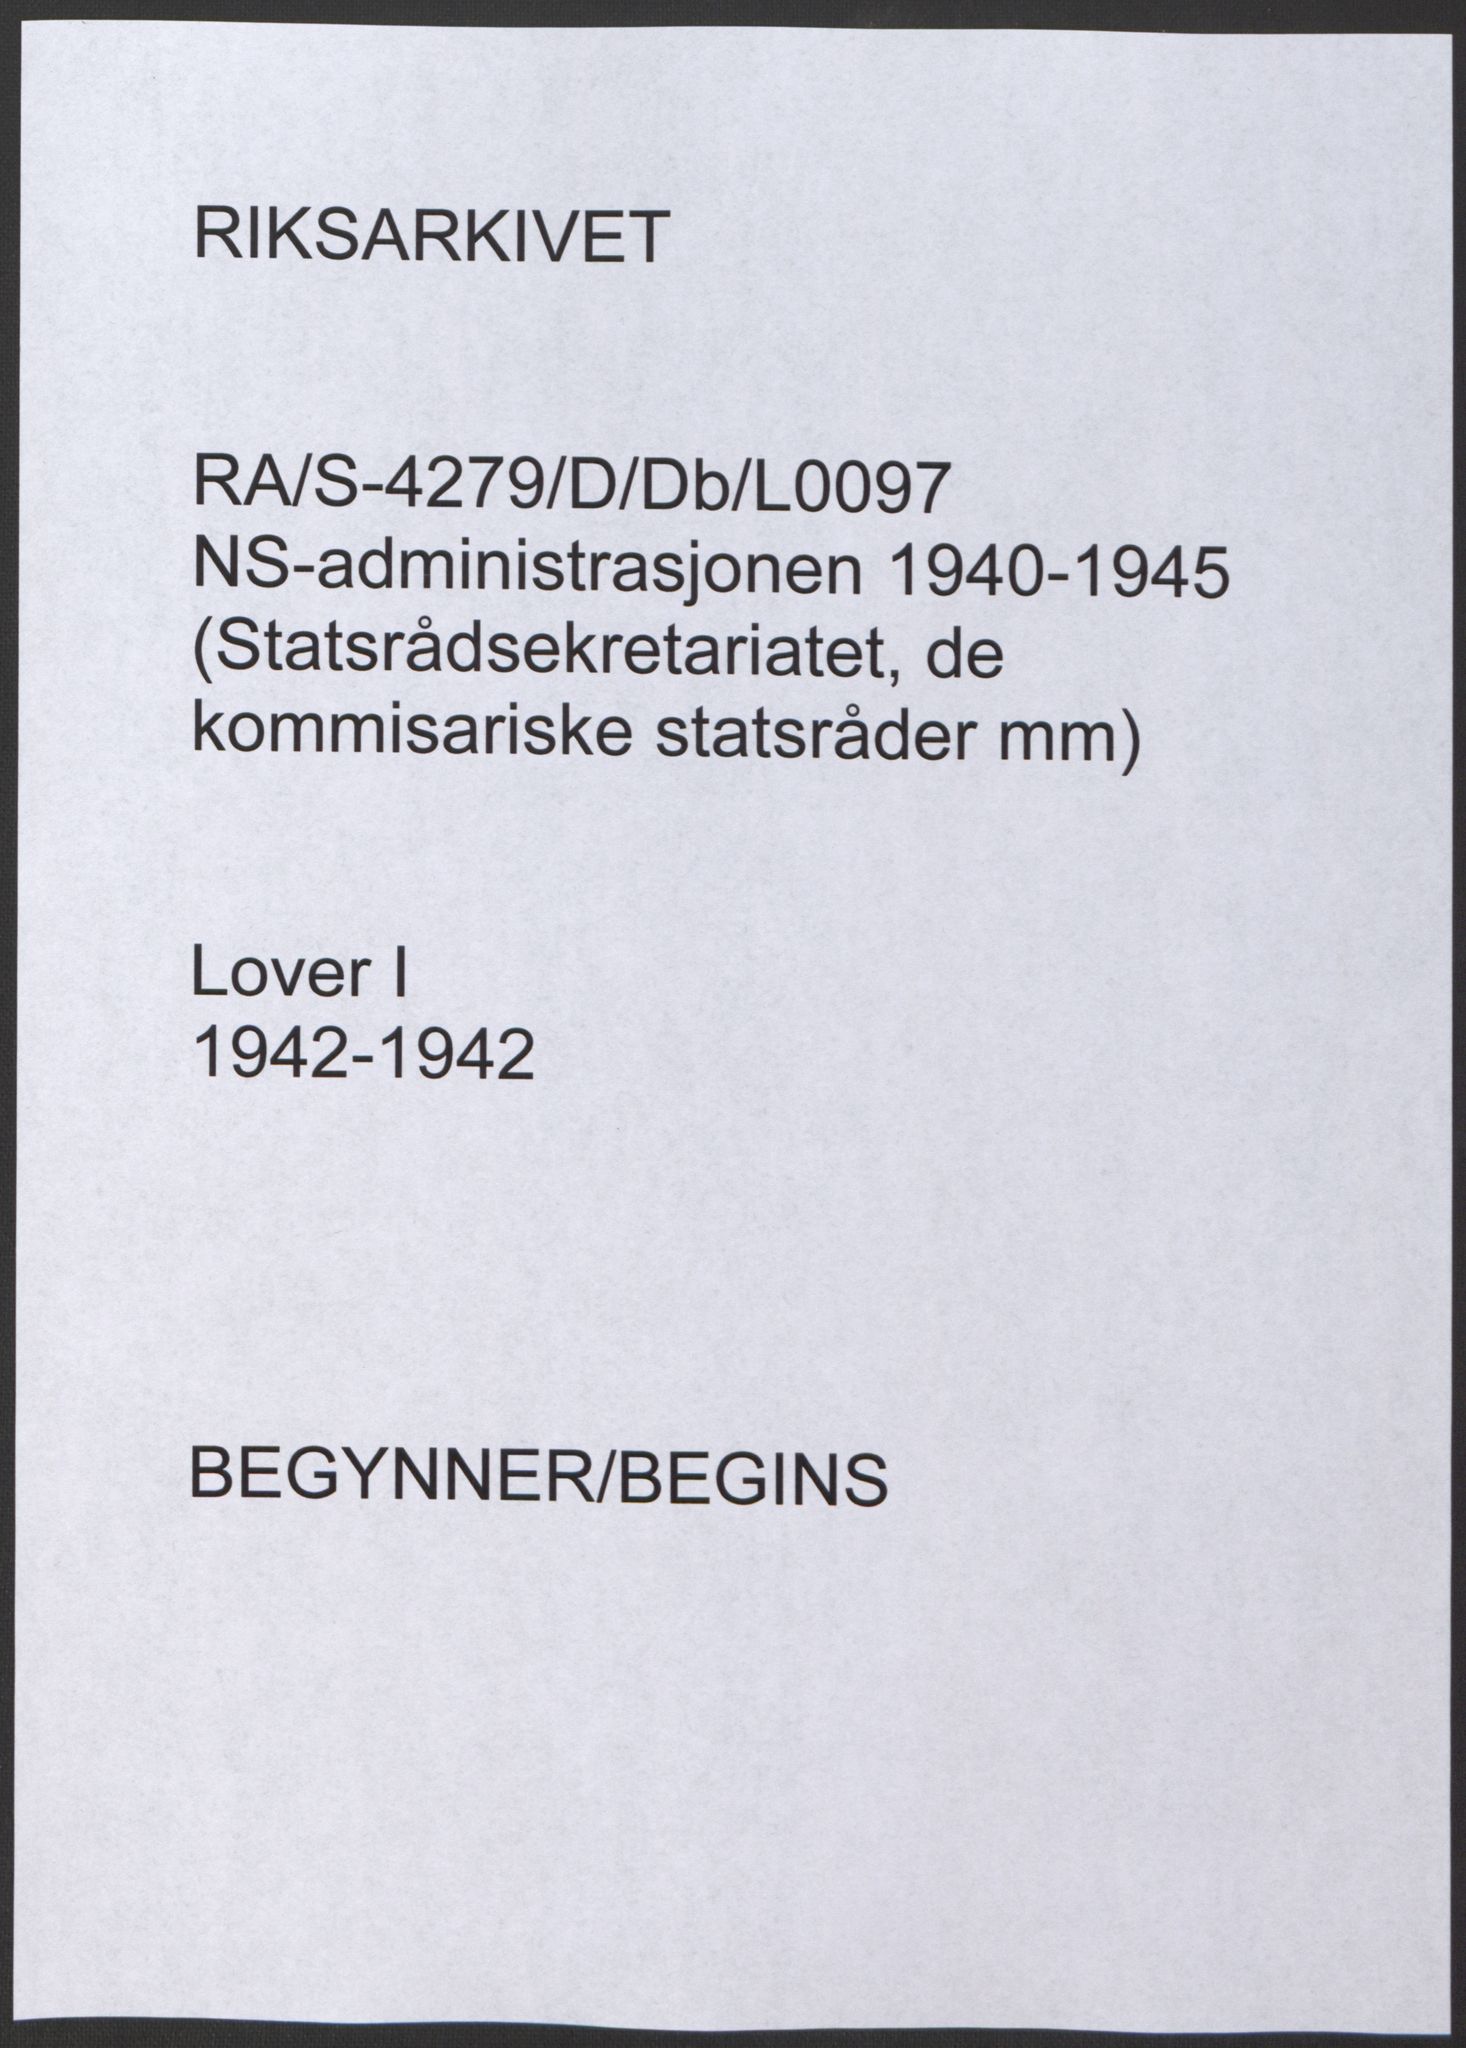 NS-administrasjonen 1940-1945 (Statsrådsekretariatet, de kommisariske statsråder mm), RA/S-4279/D/Db/L0097: Lover I, 1942, p. 1